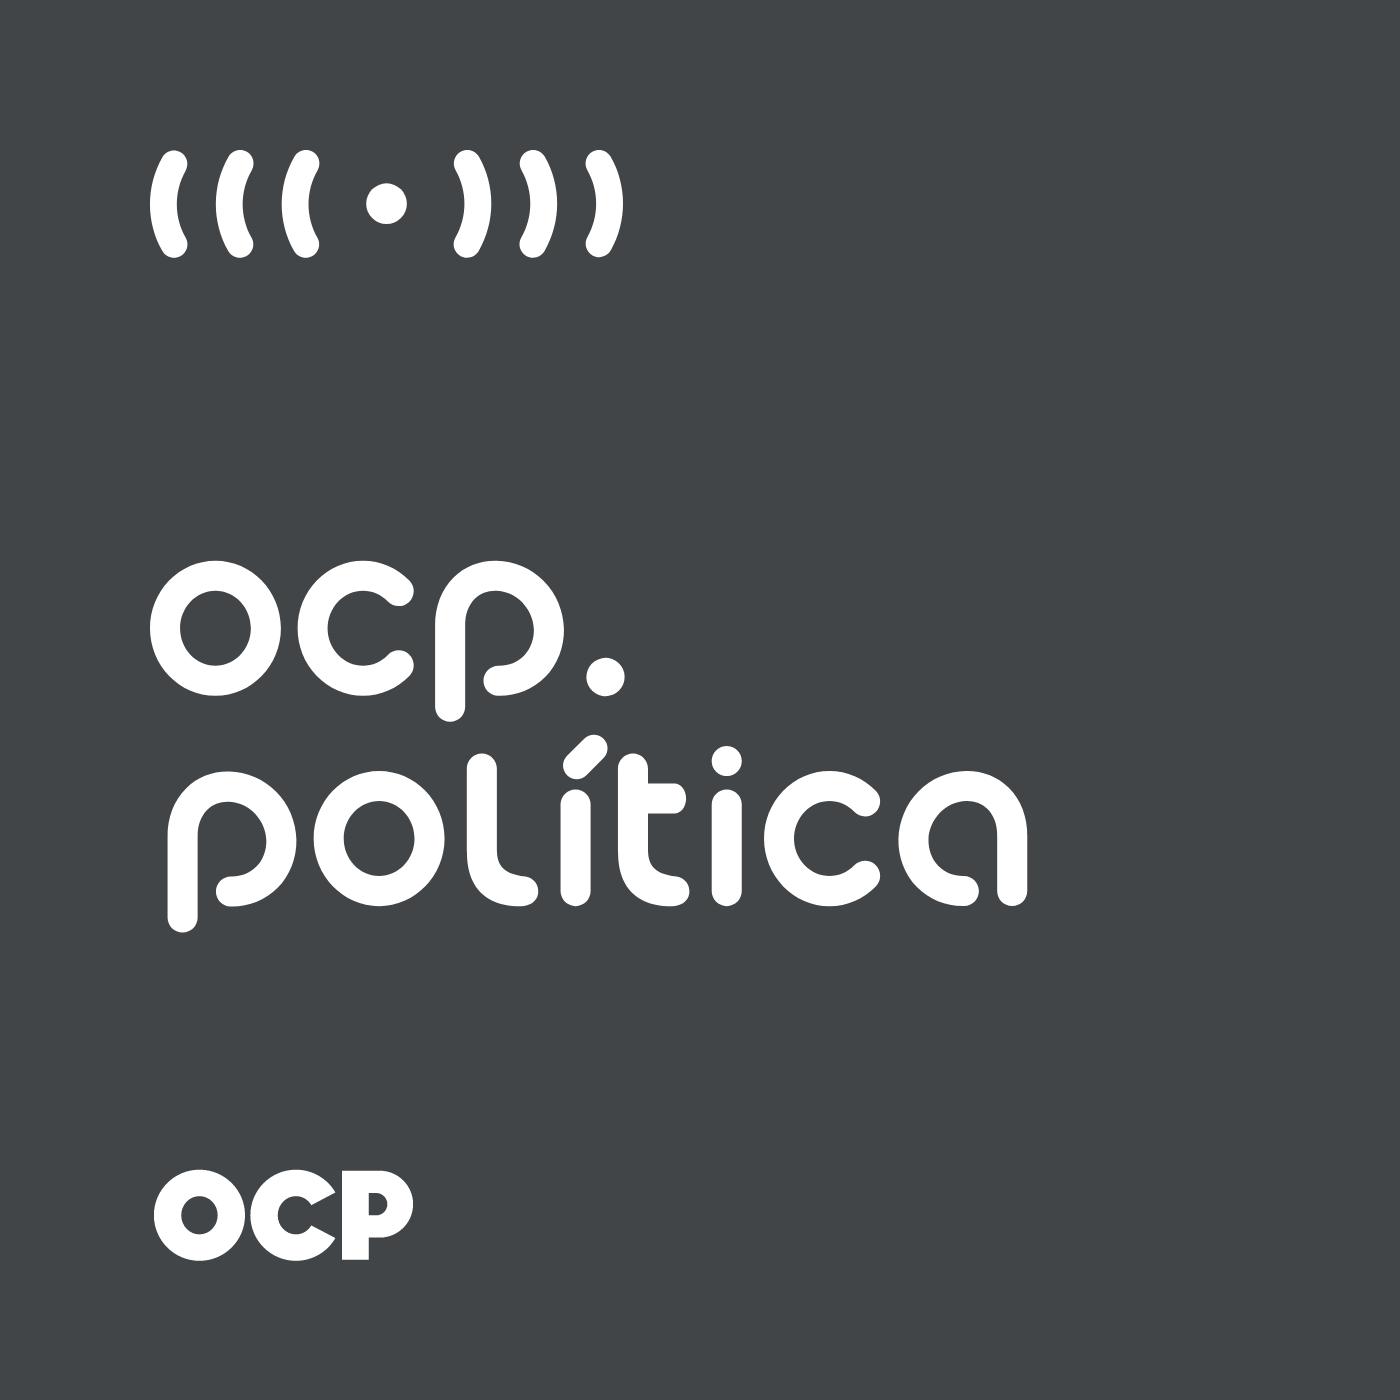 Podcast OCP Política: semipresidencialismo daria certo no Brasil?